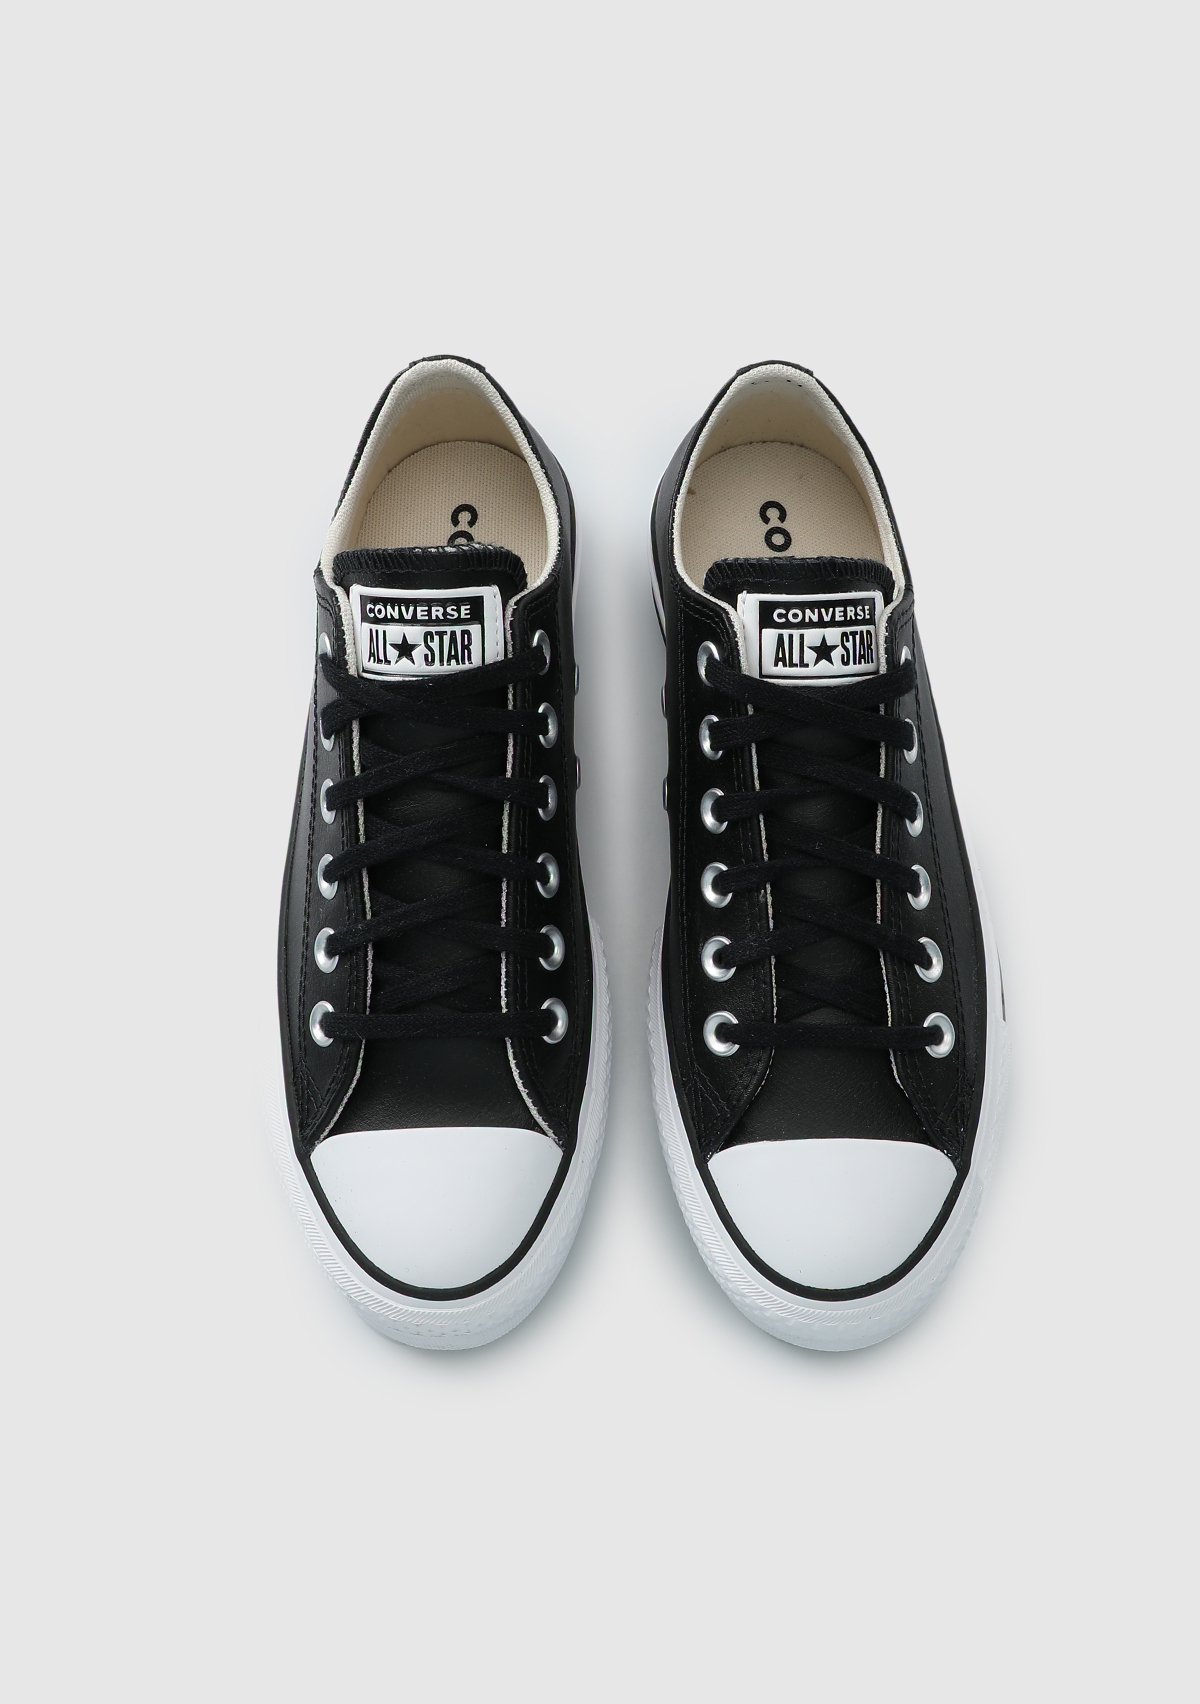 Converse Chuck Taylor All Star Leather Platform Siyah Kadın Sneaker 561681C